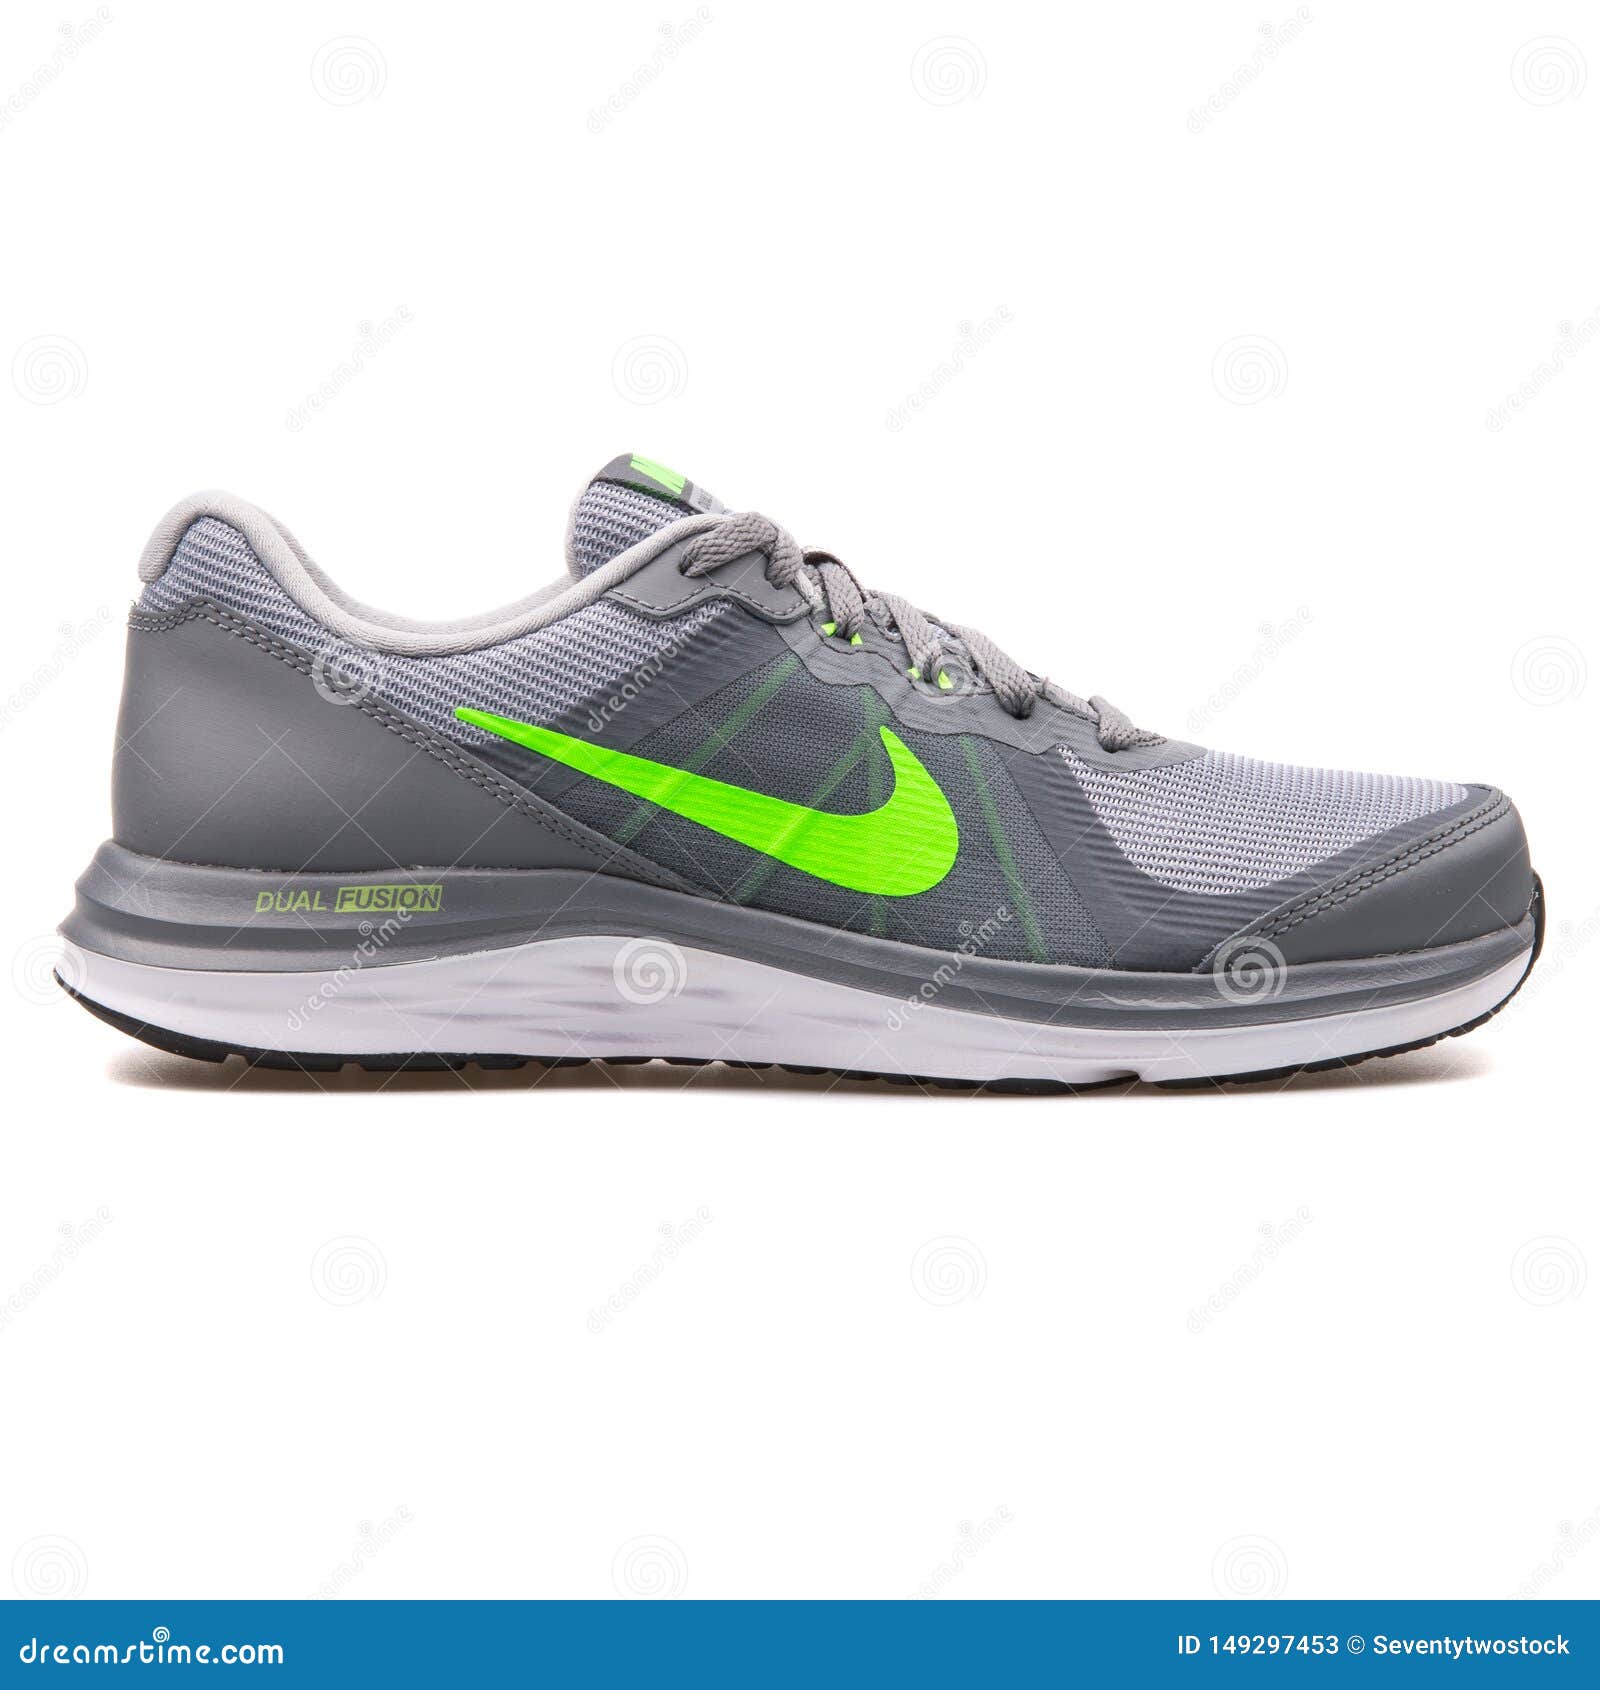 Nike Dual Fusion X 2 Grey and Green 